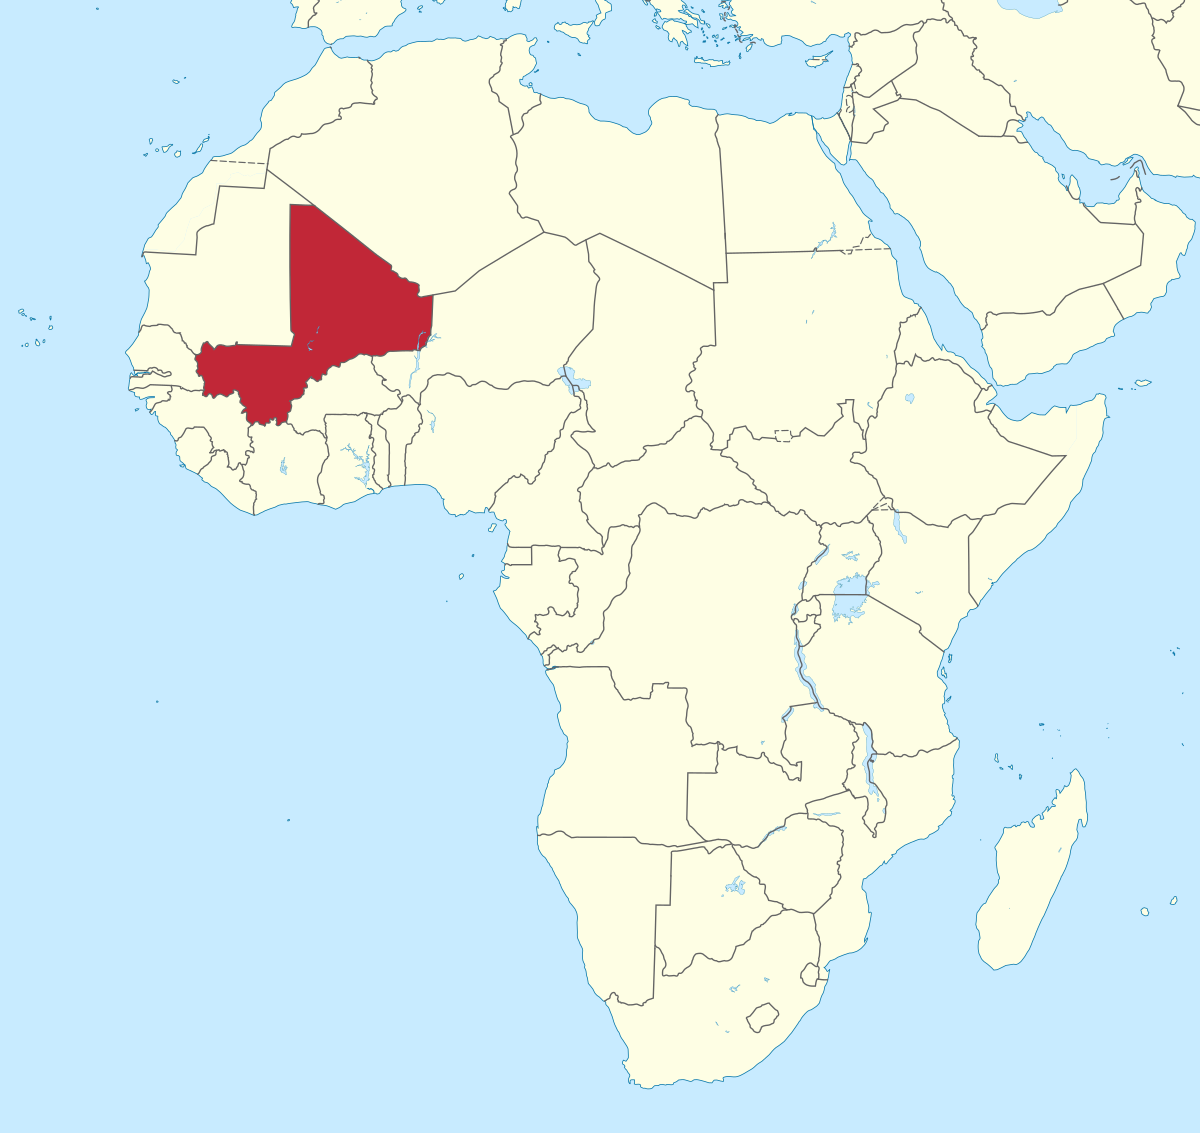 Mali Map Of Africa File:Mali in Africa ( mini map  rivers).svg   Wikimedia Commons